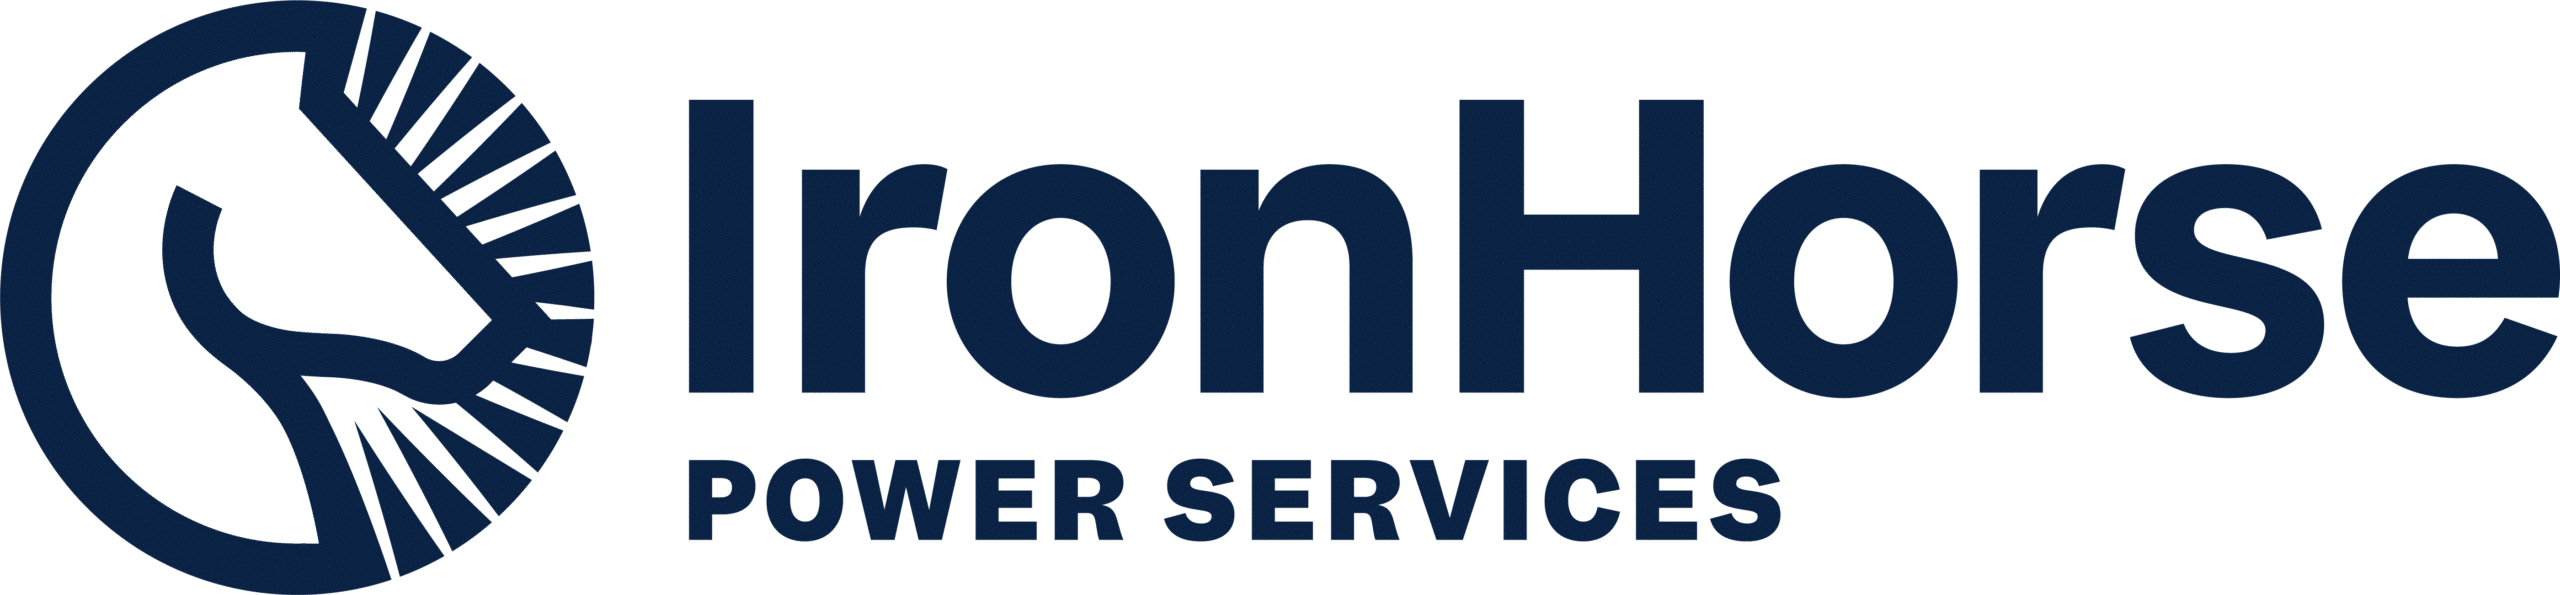 IronHorse Power Services